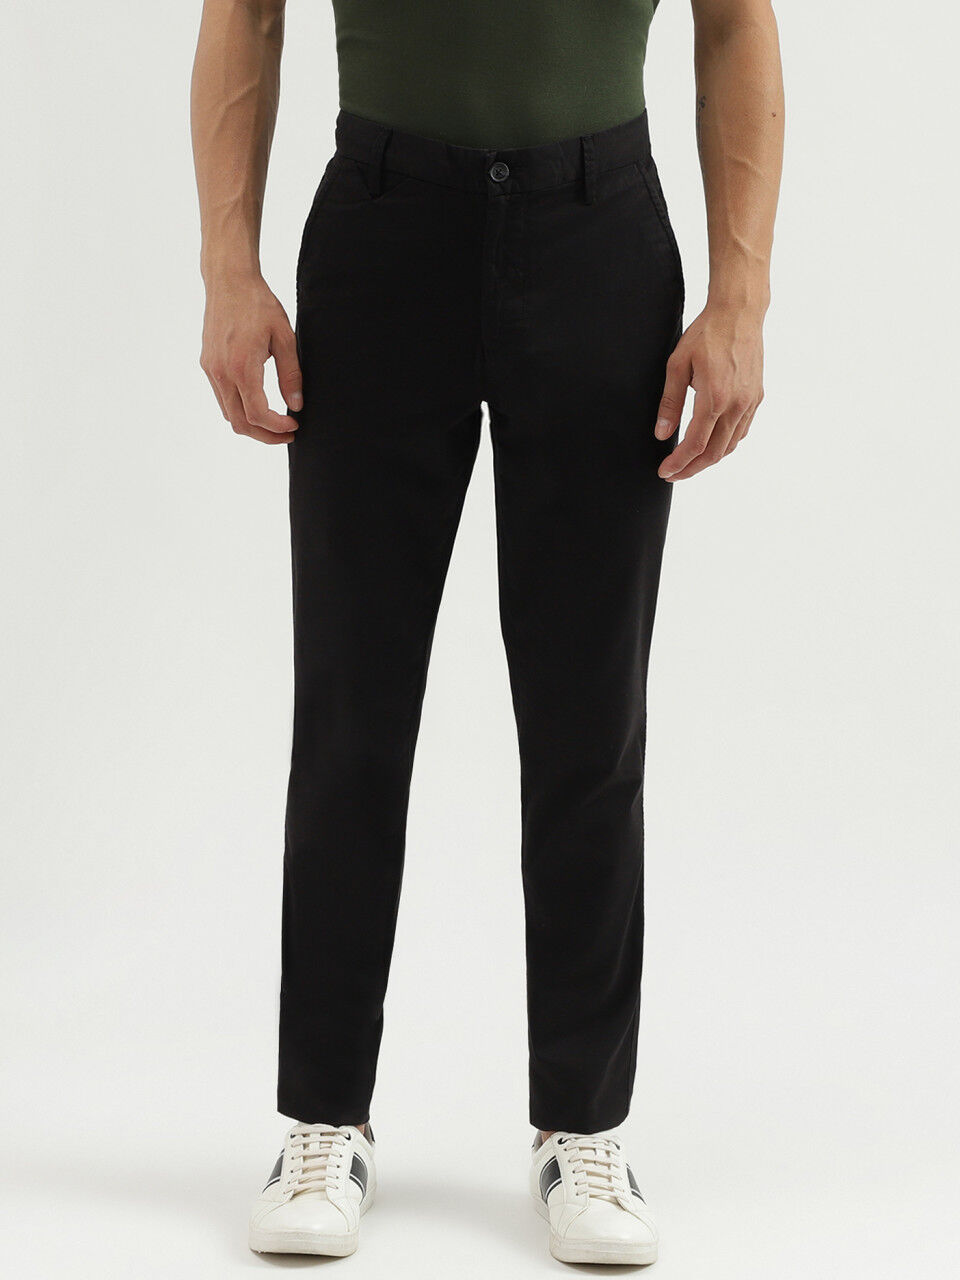 Buy PARK AVENUE Mens Regular Fit 4 Pocket Solid Formal Trousers | Shoppers  Stop